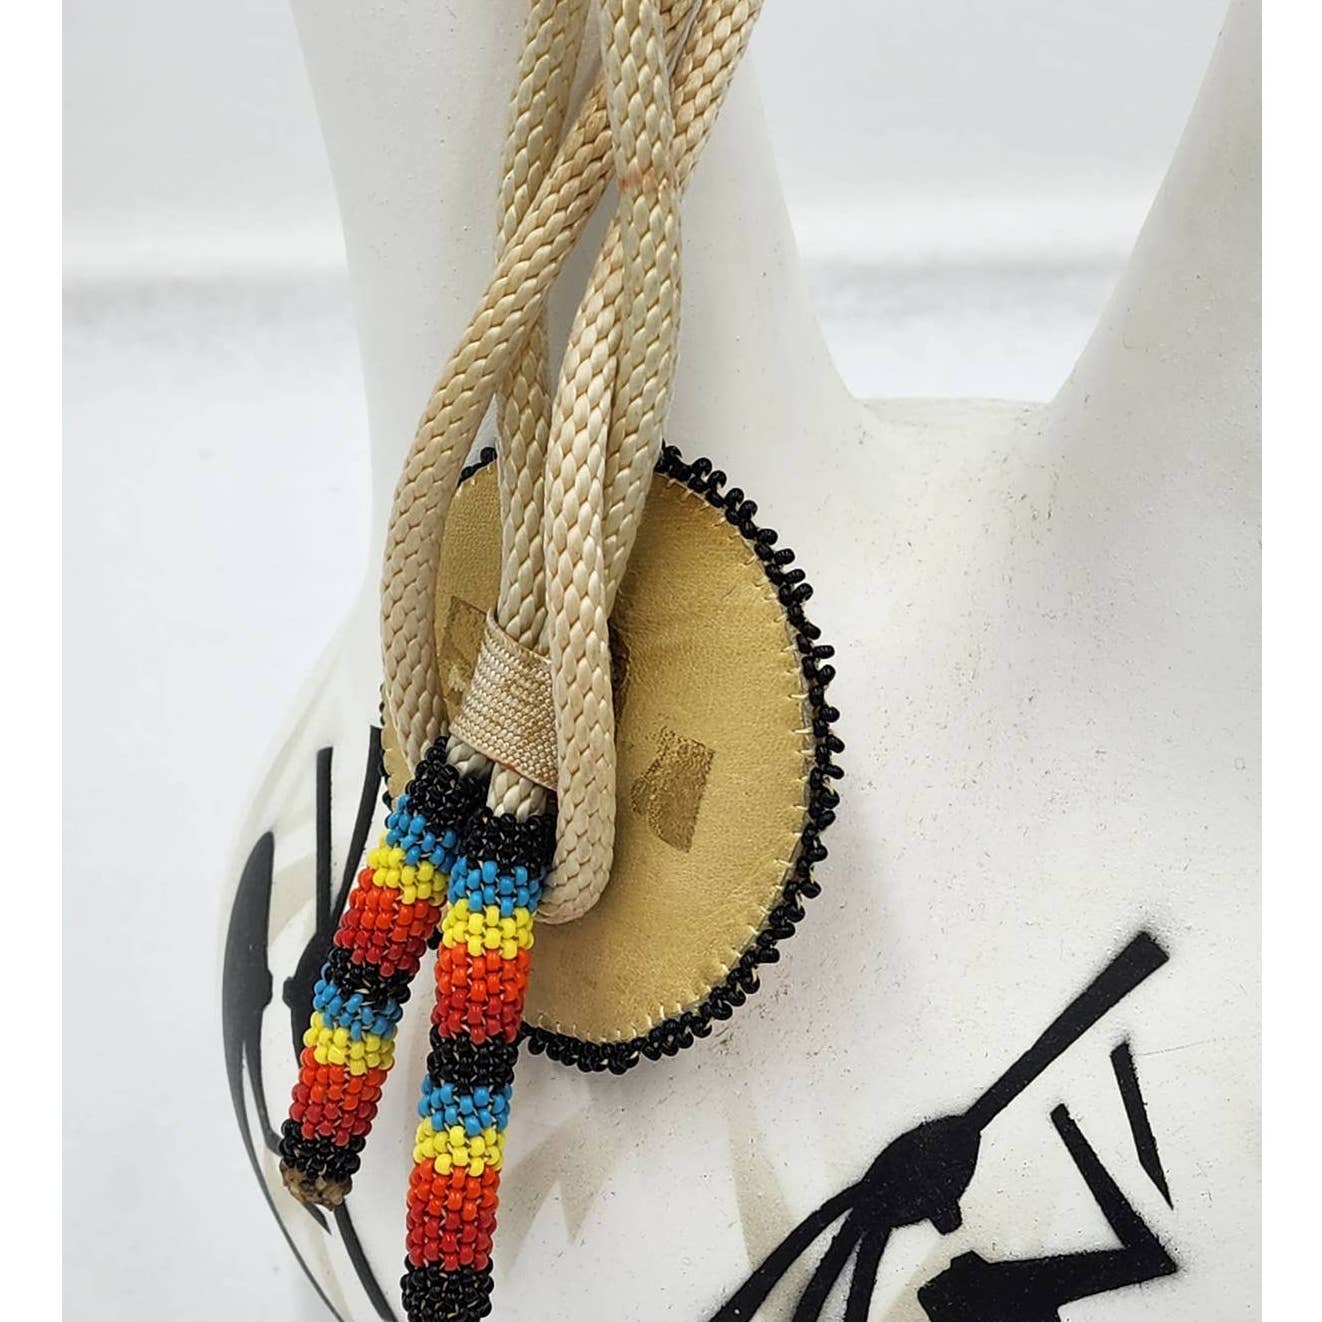 Vintage Native American Style Southwestern Pottery Kokopelli Wedding Vase Folk Art Rope Beaded Medallion Signed